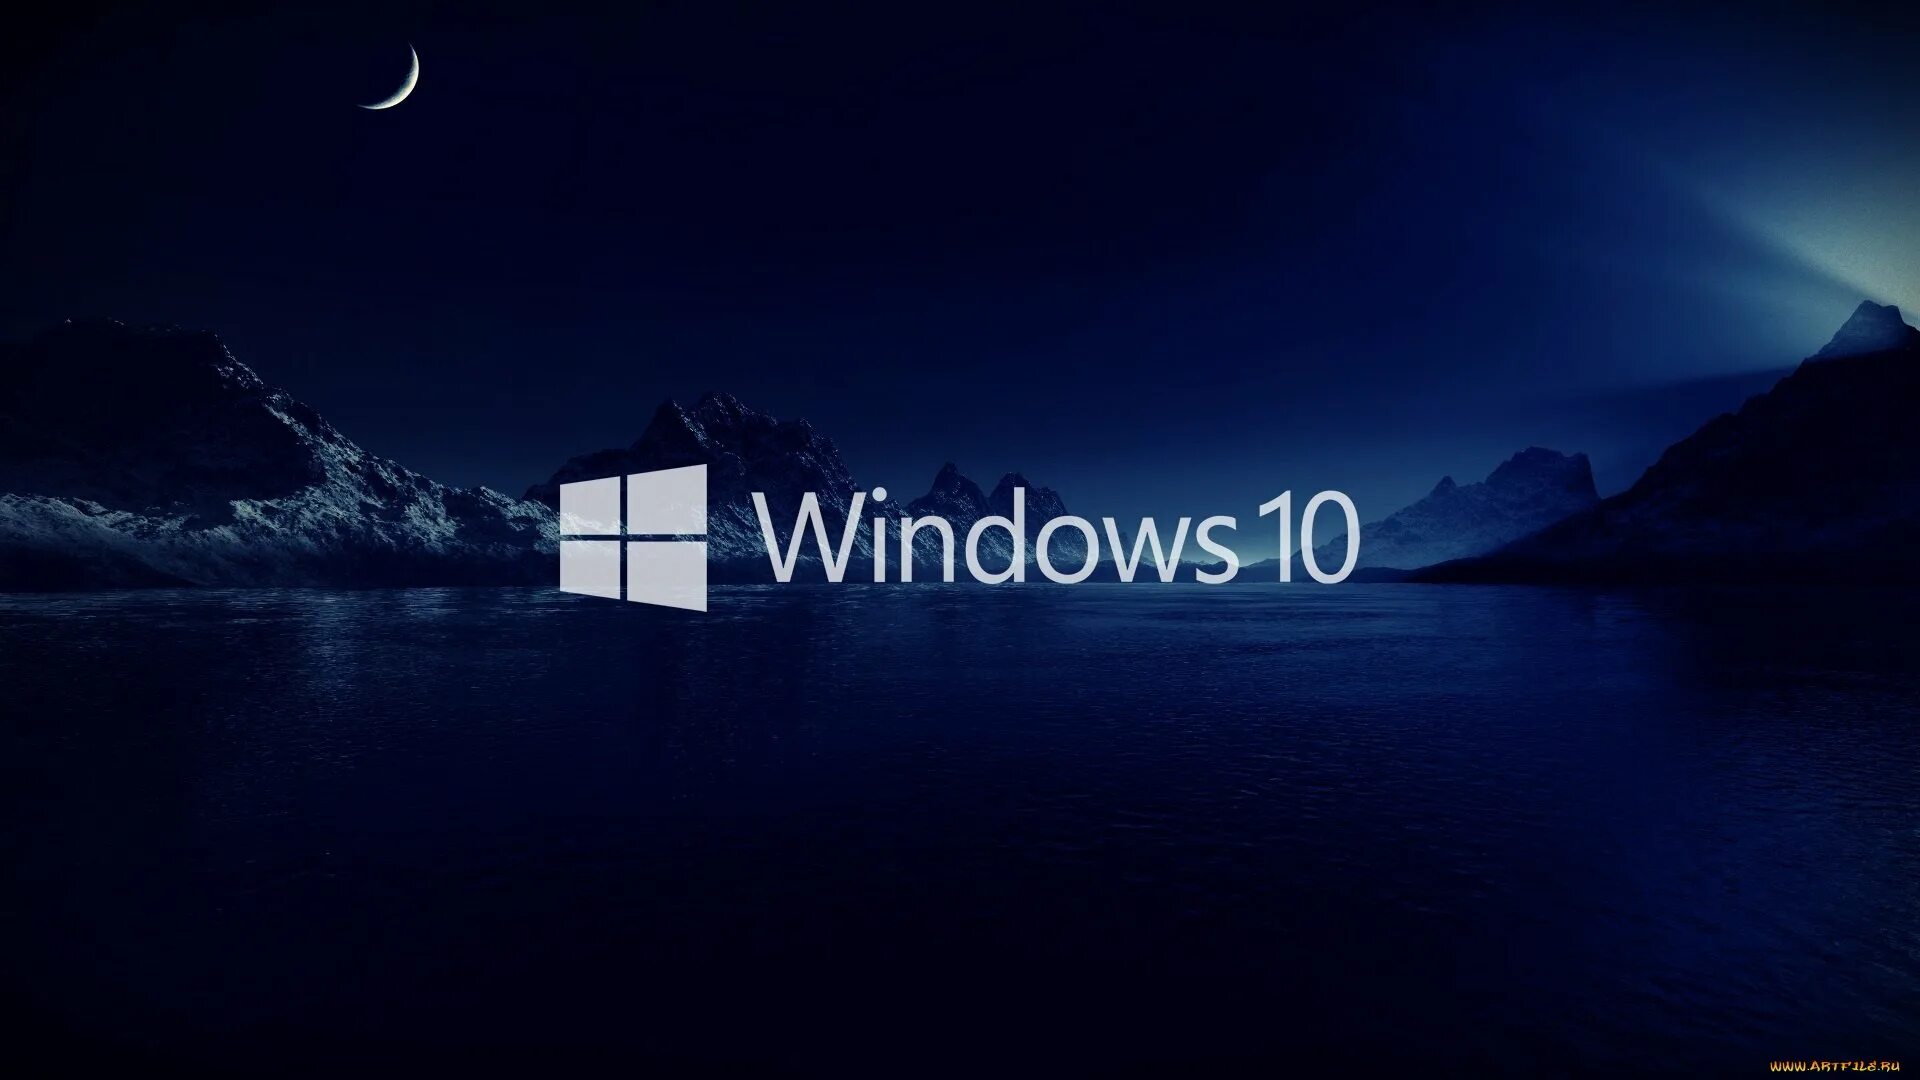 Шрифт вин 10. Виндокюус 10. Заставка виндовс 10. Картинки Windows 10. Фоновое изображение Windows 10.